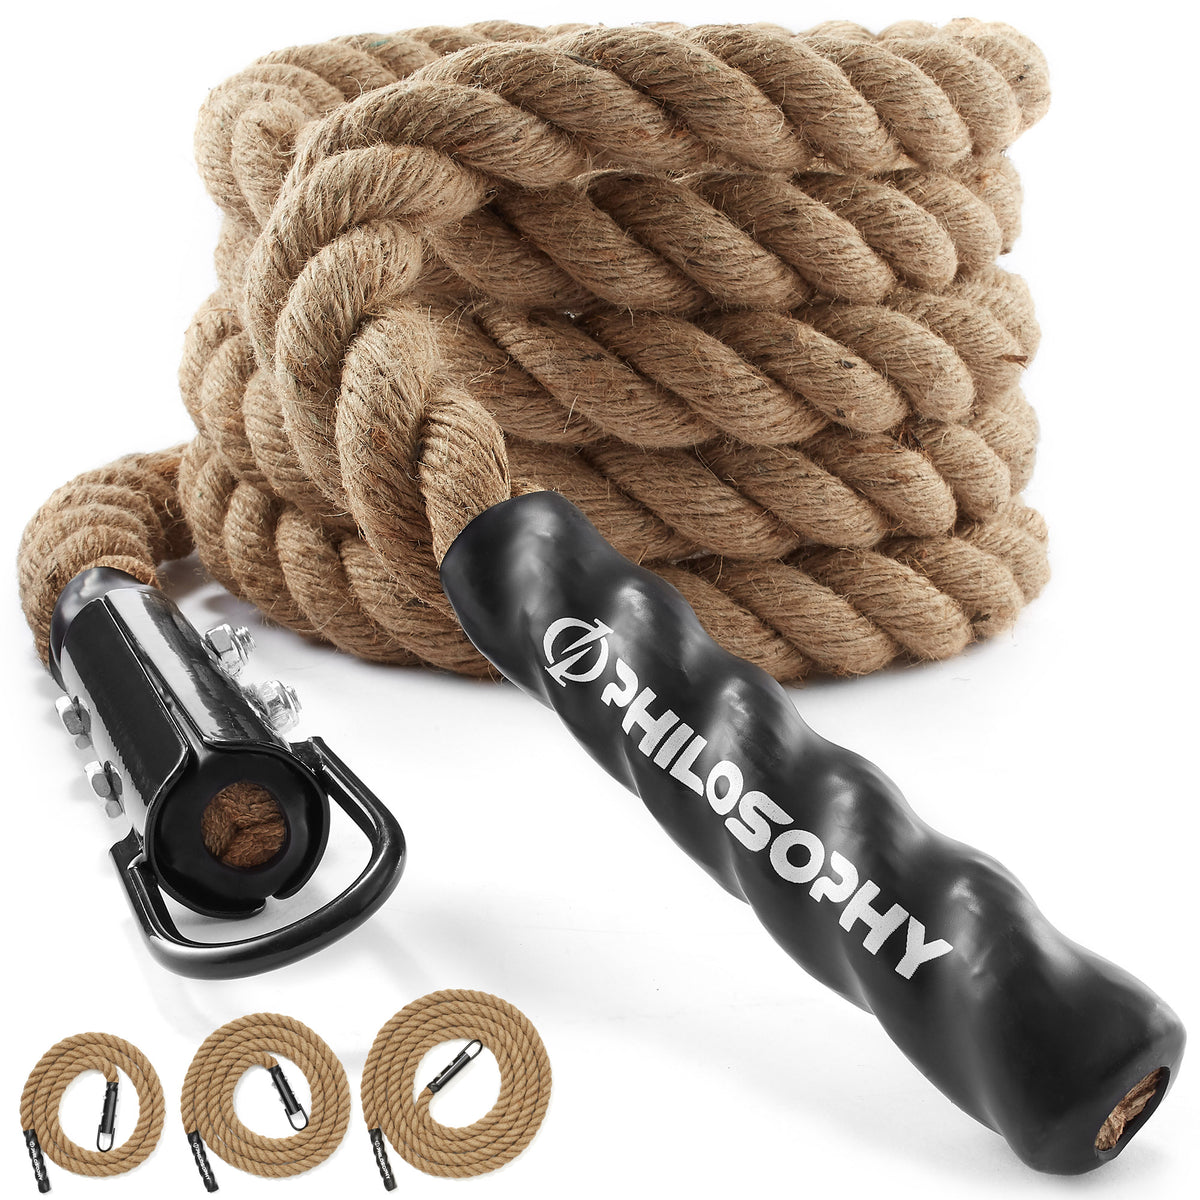 Climbing Ropes - Gymnastics & Grip Training